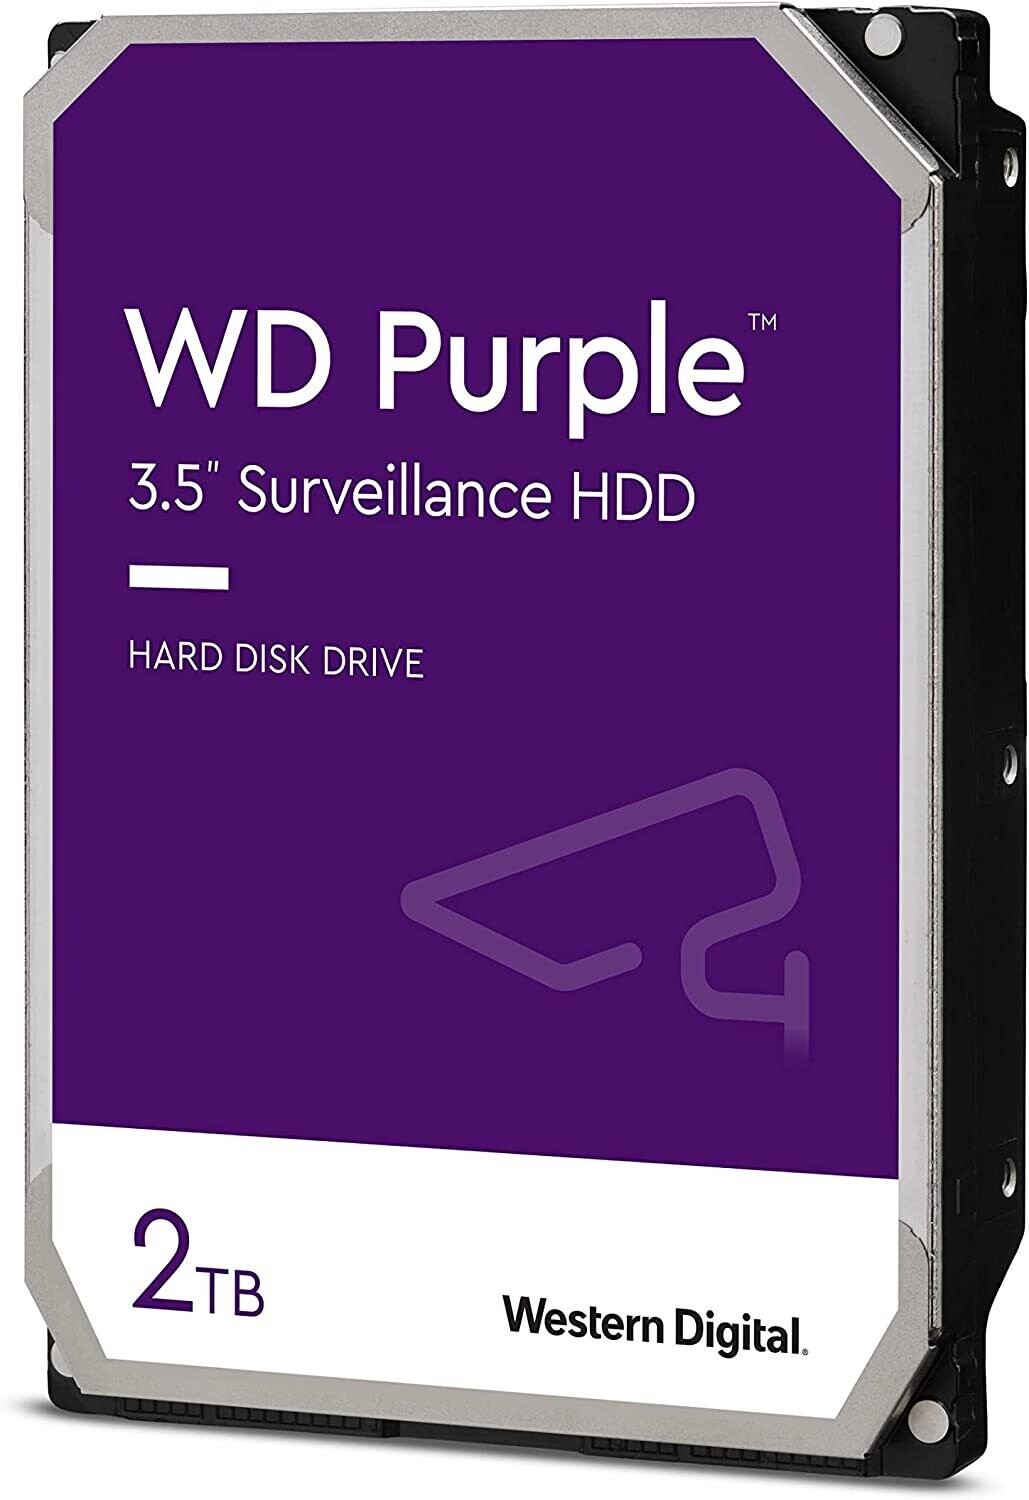 Western Digital 2TB WD Purple Surveillance.